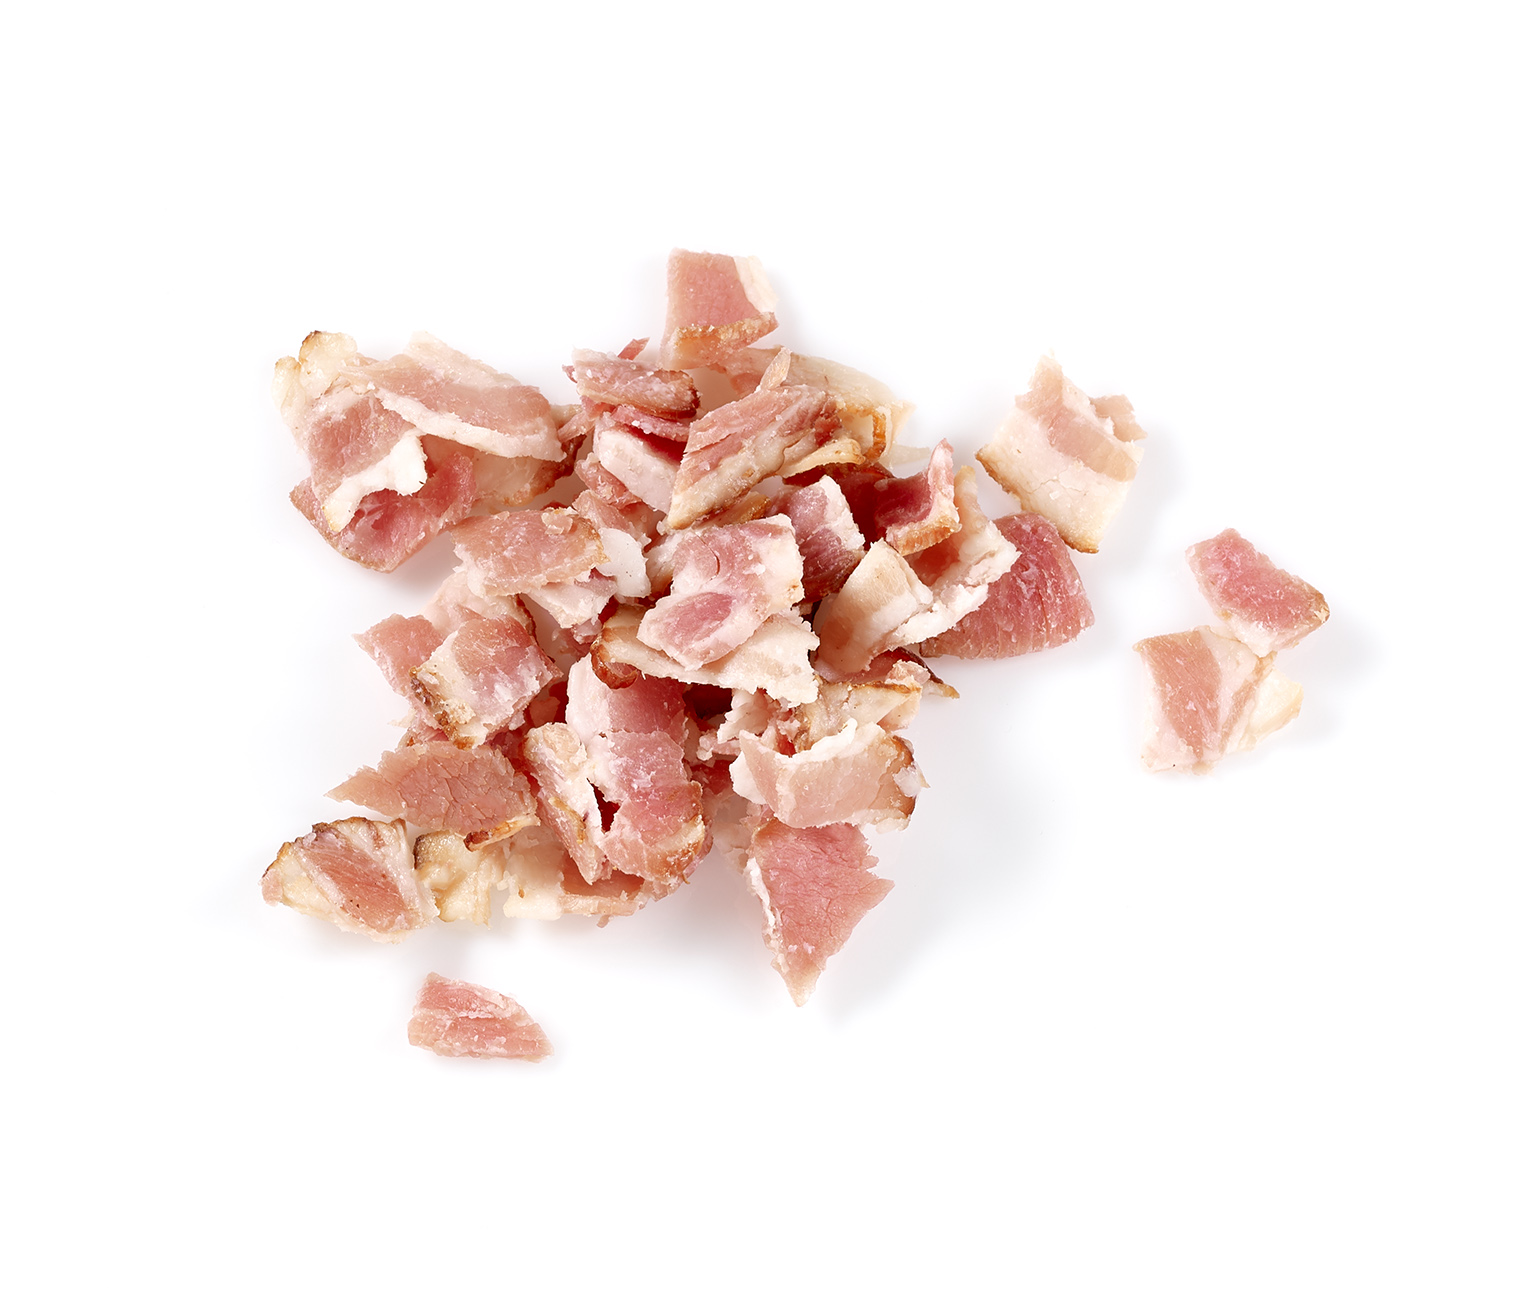 Crispy Bacon Bits Poland manufacturer by Kaminiarz